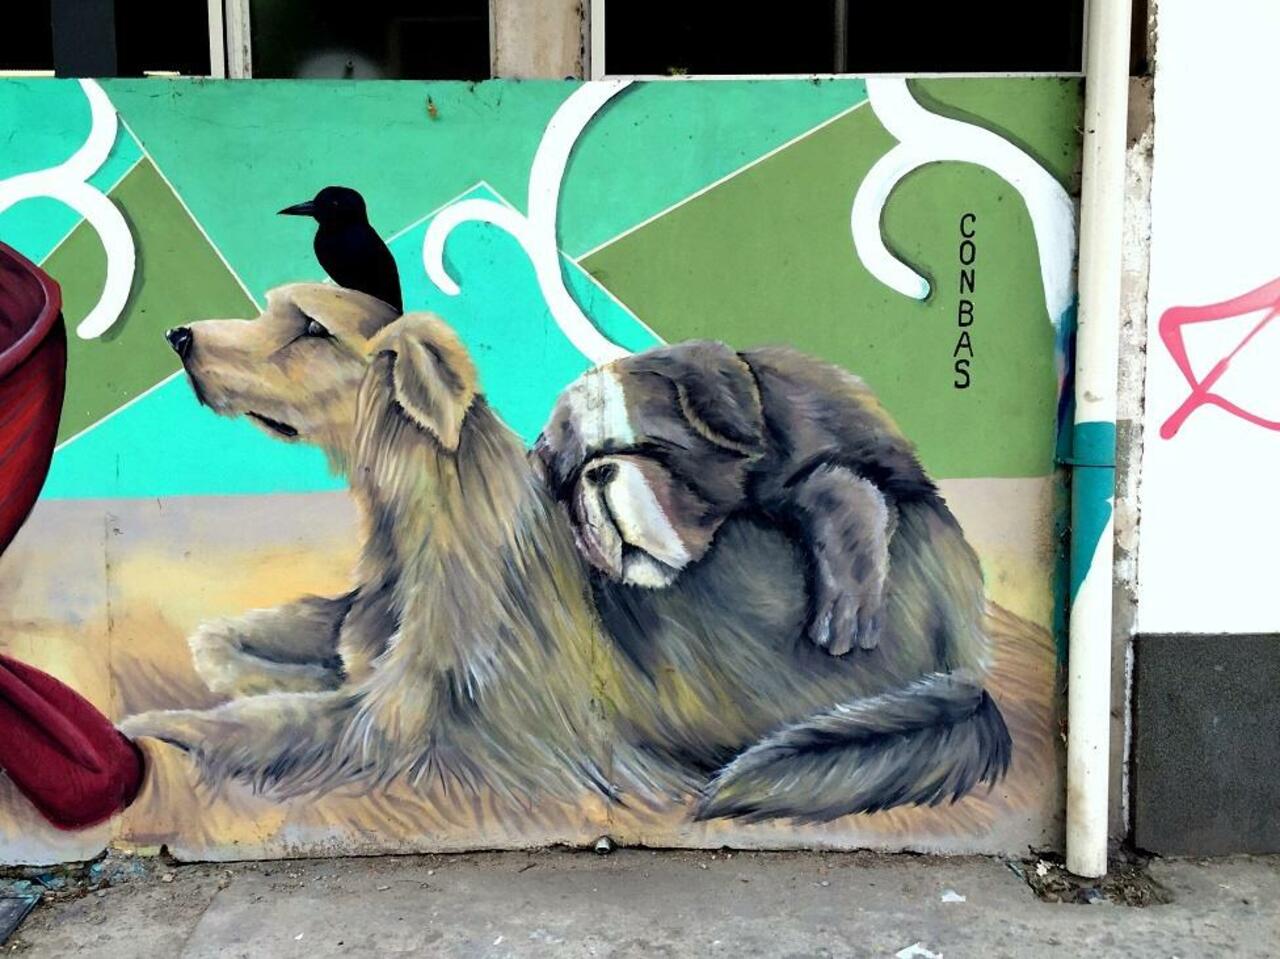 #Graffiti de hoy: << Amigos son los amigos... >> calle 22, 60y61 #LaPlata #Argentina #StreetArt #UrbanArt #ArteUrbano http://t.co/K87UqmFnZJ